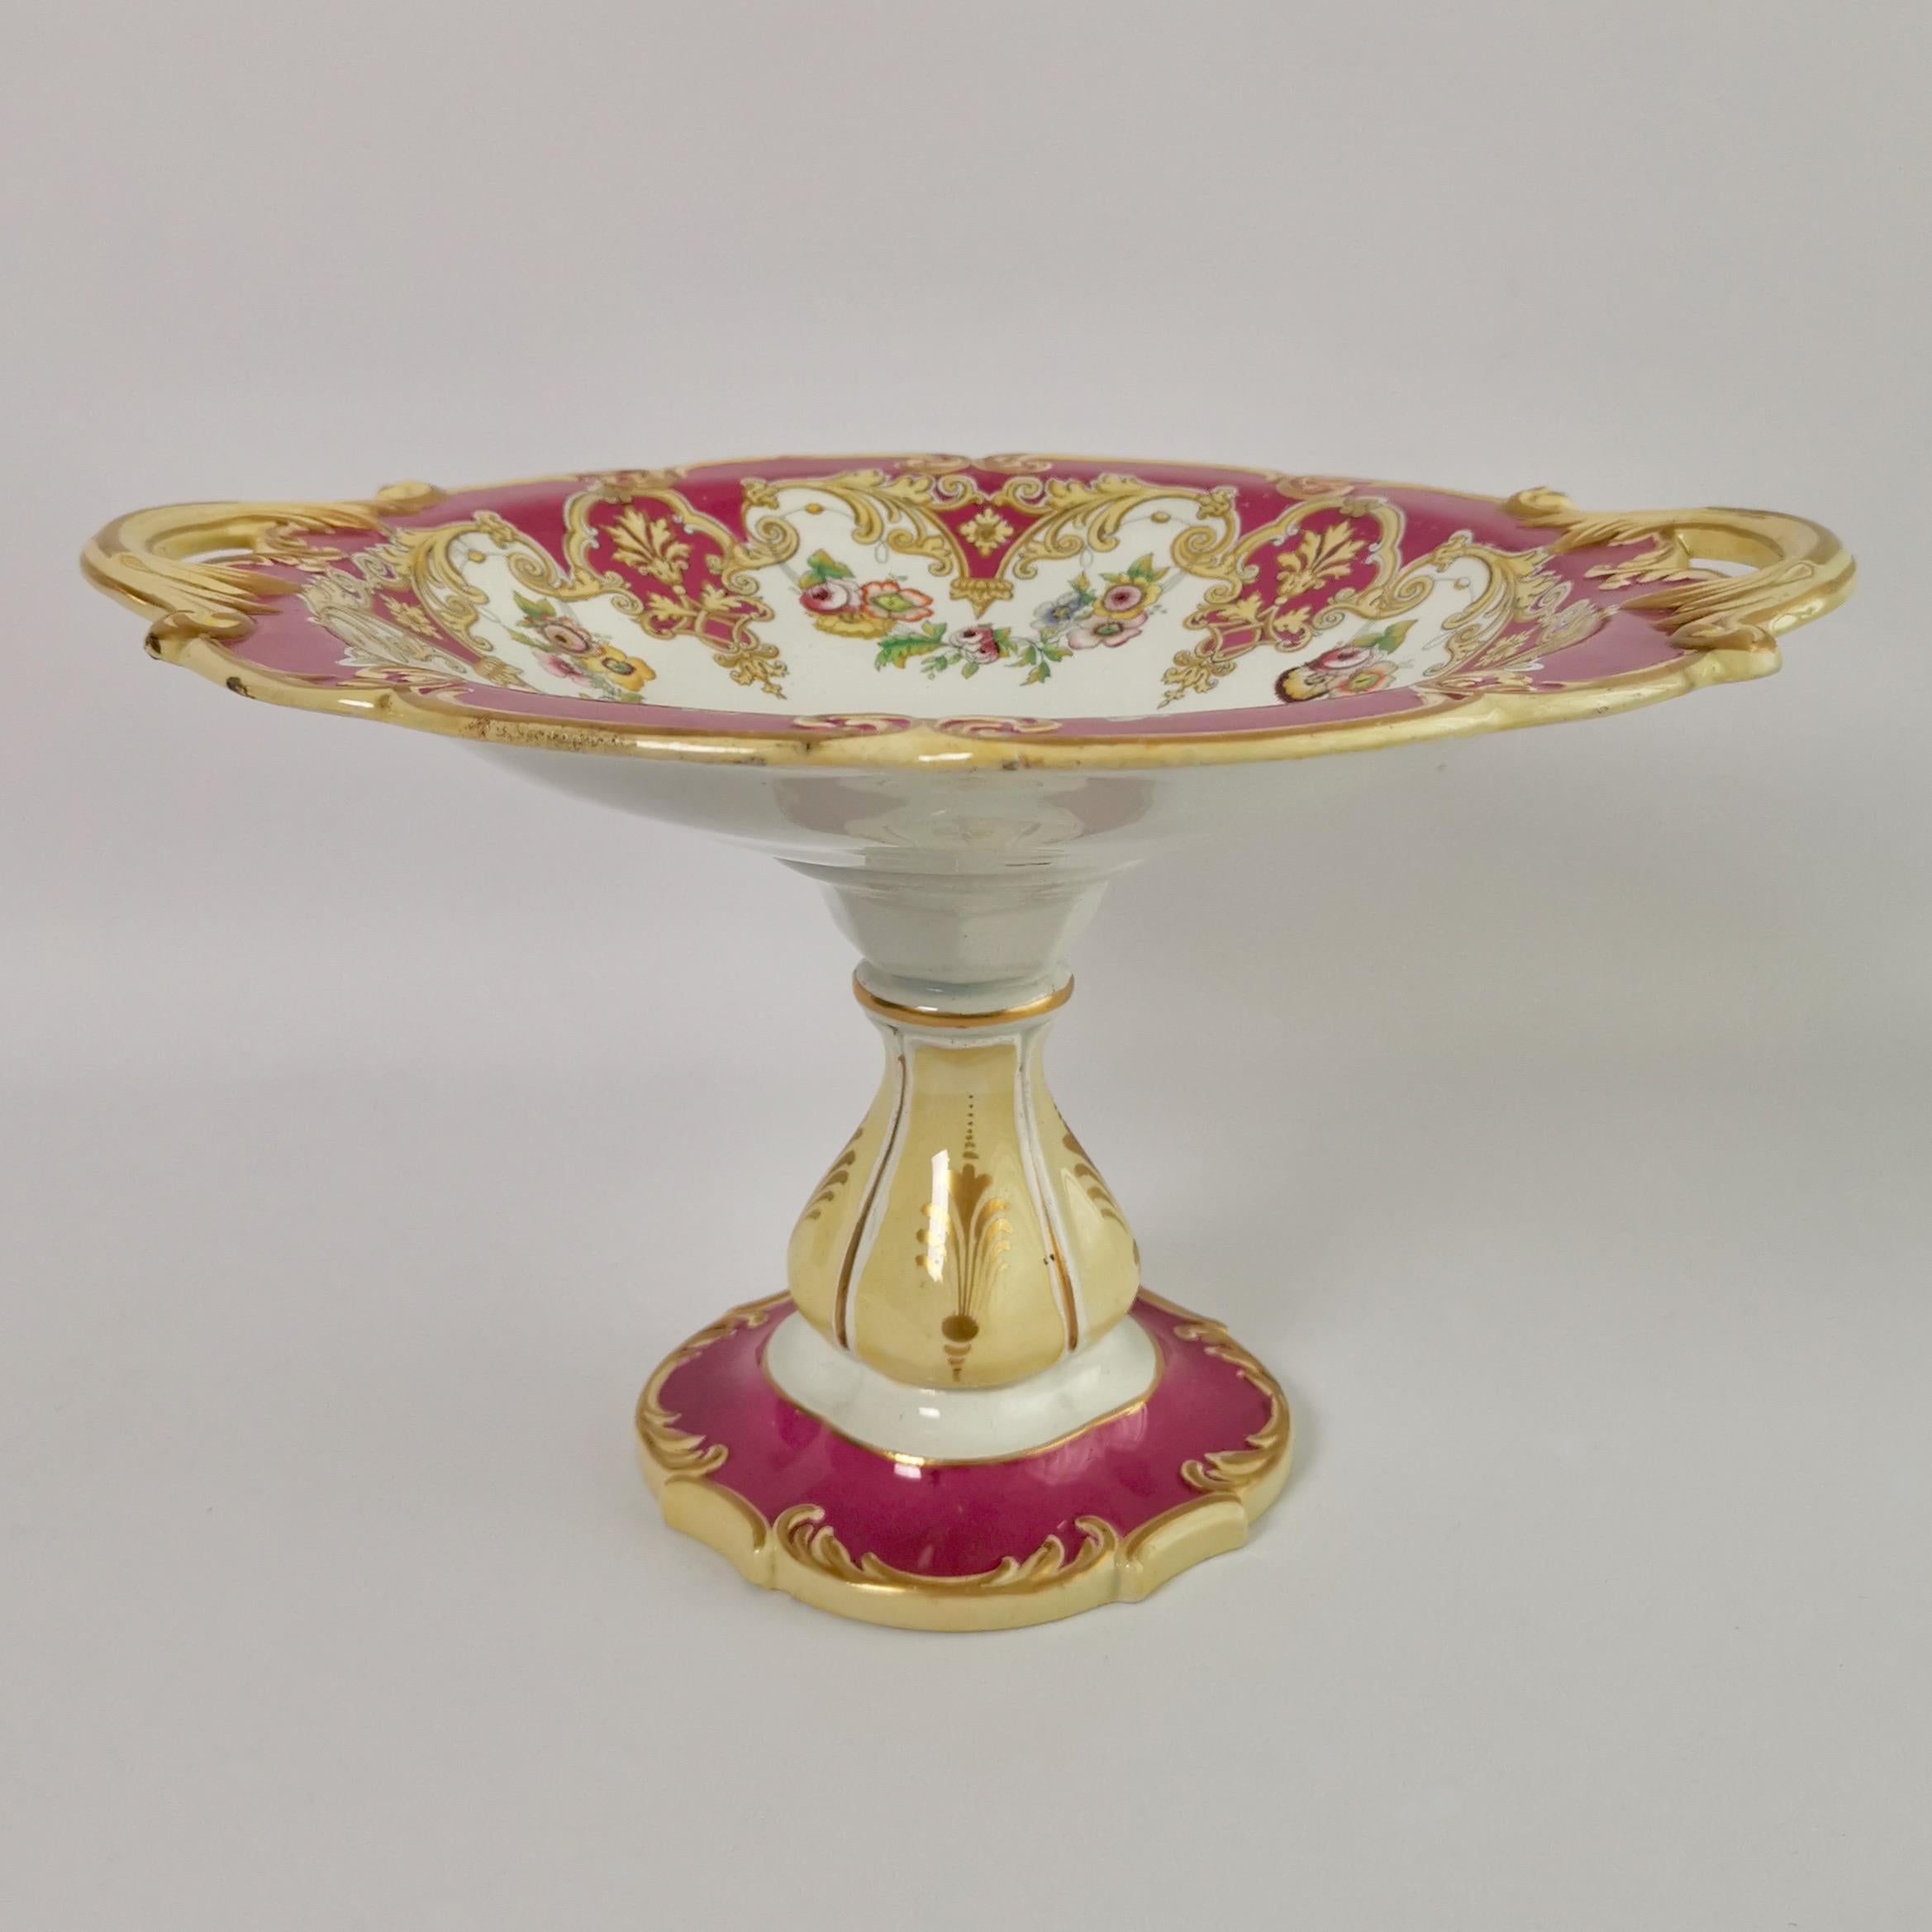 English Ridgway Earthenware Dessert Service, Fuchsia Pink, Floral Festoons, ca 1870